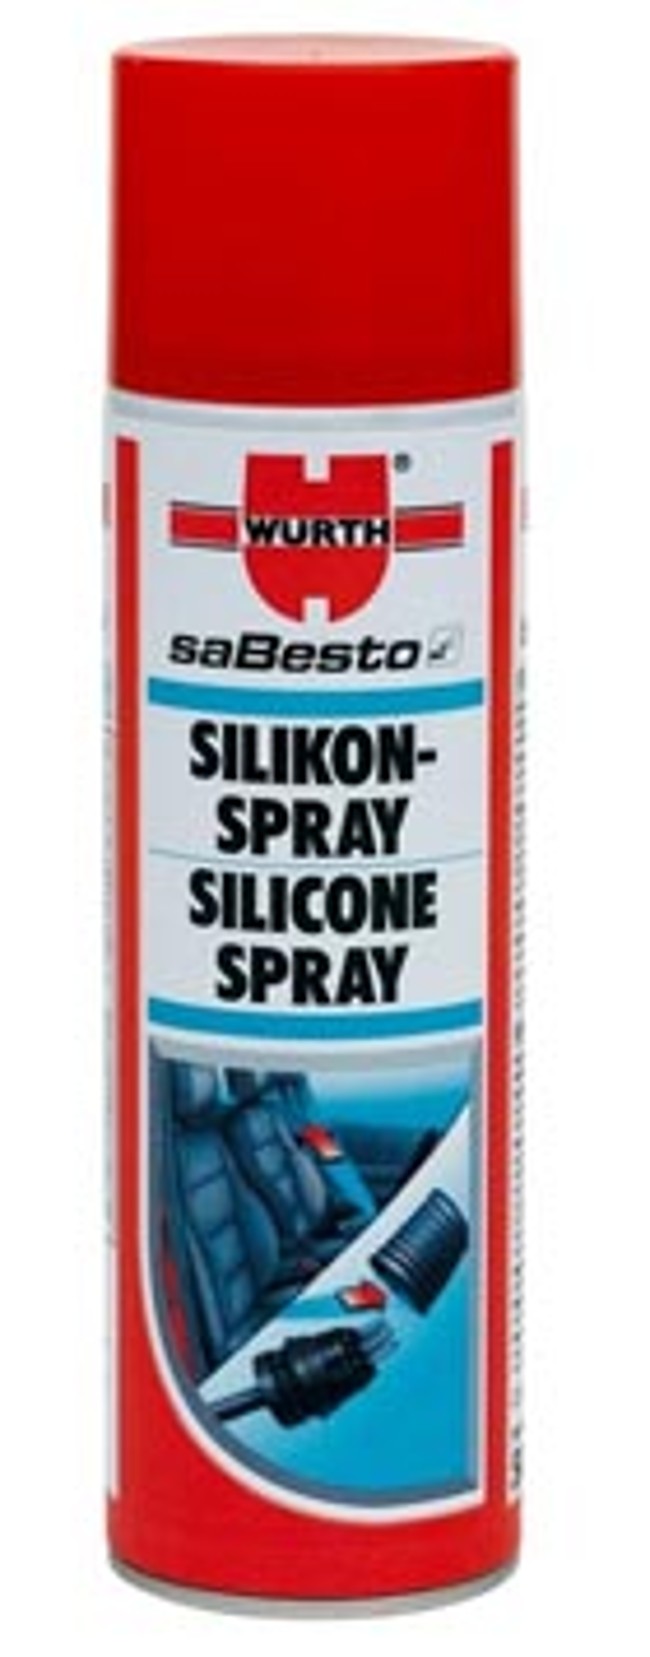 Würth protection & maintenance silicone spray 500ml